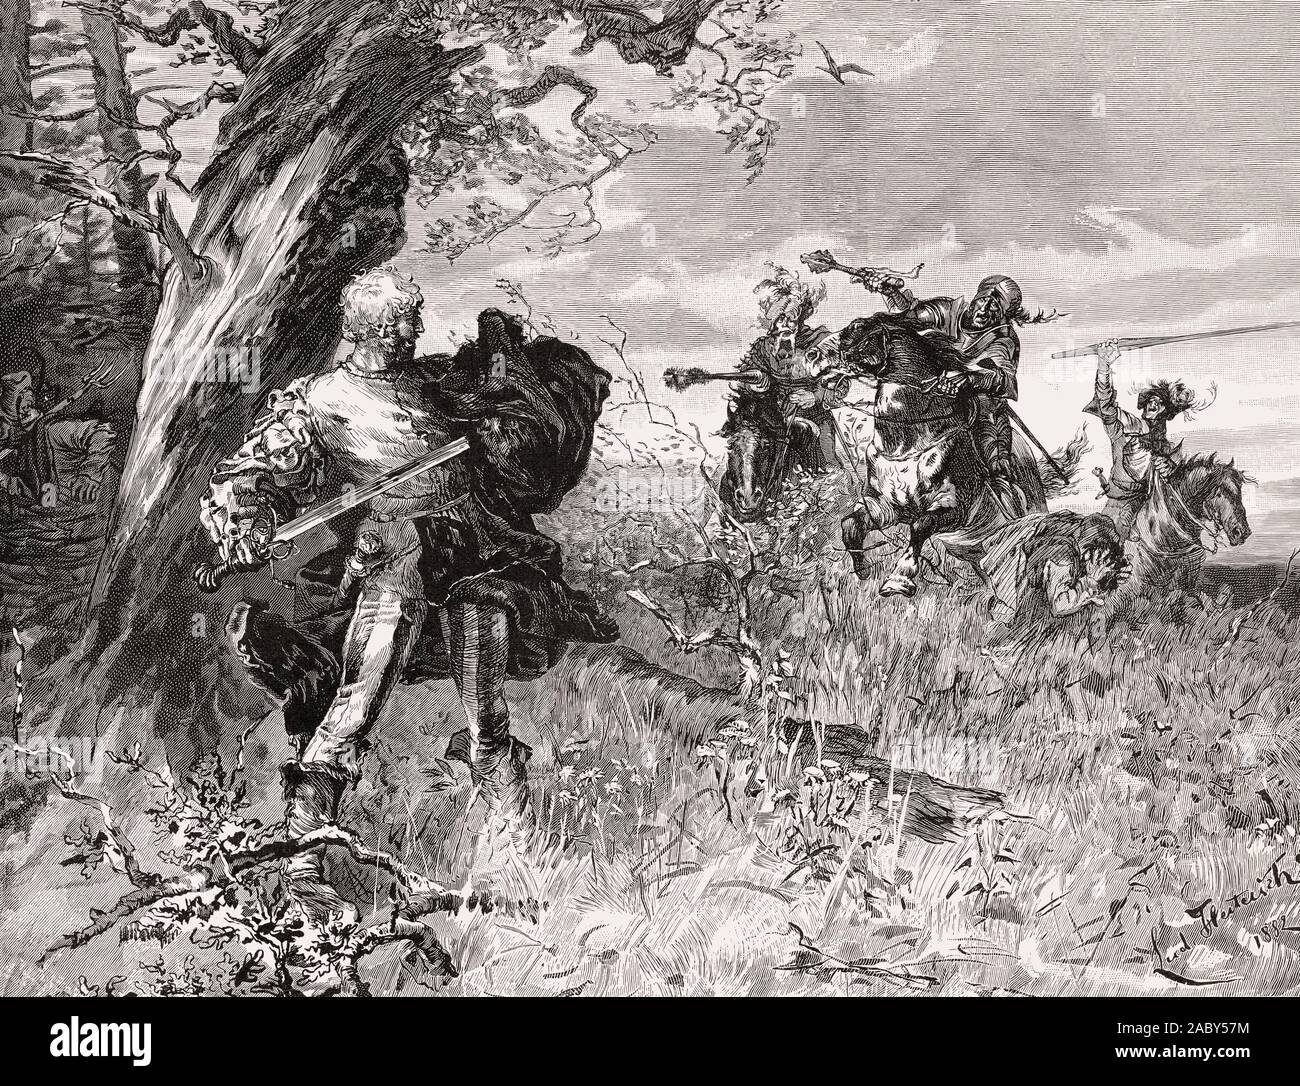 La morte di Florian Geyer von Giebelstadt, Tedesco Guerra dei contadini, 1525 Foto Stock